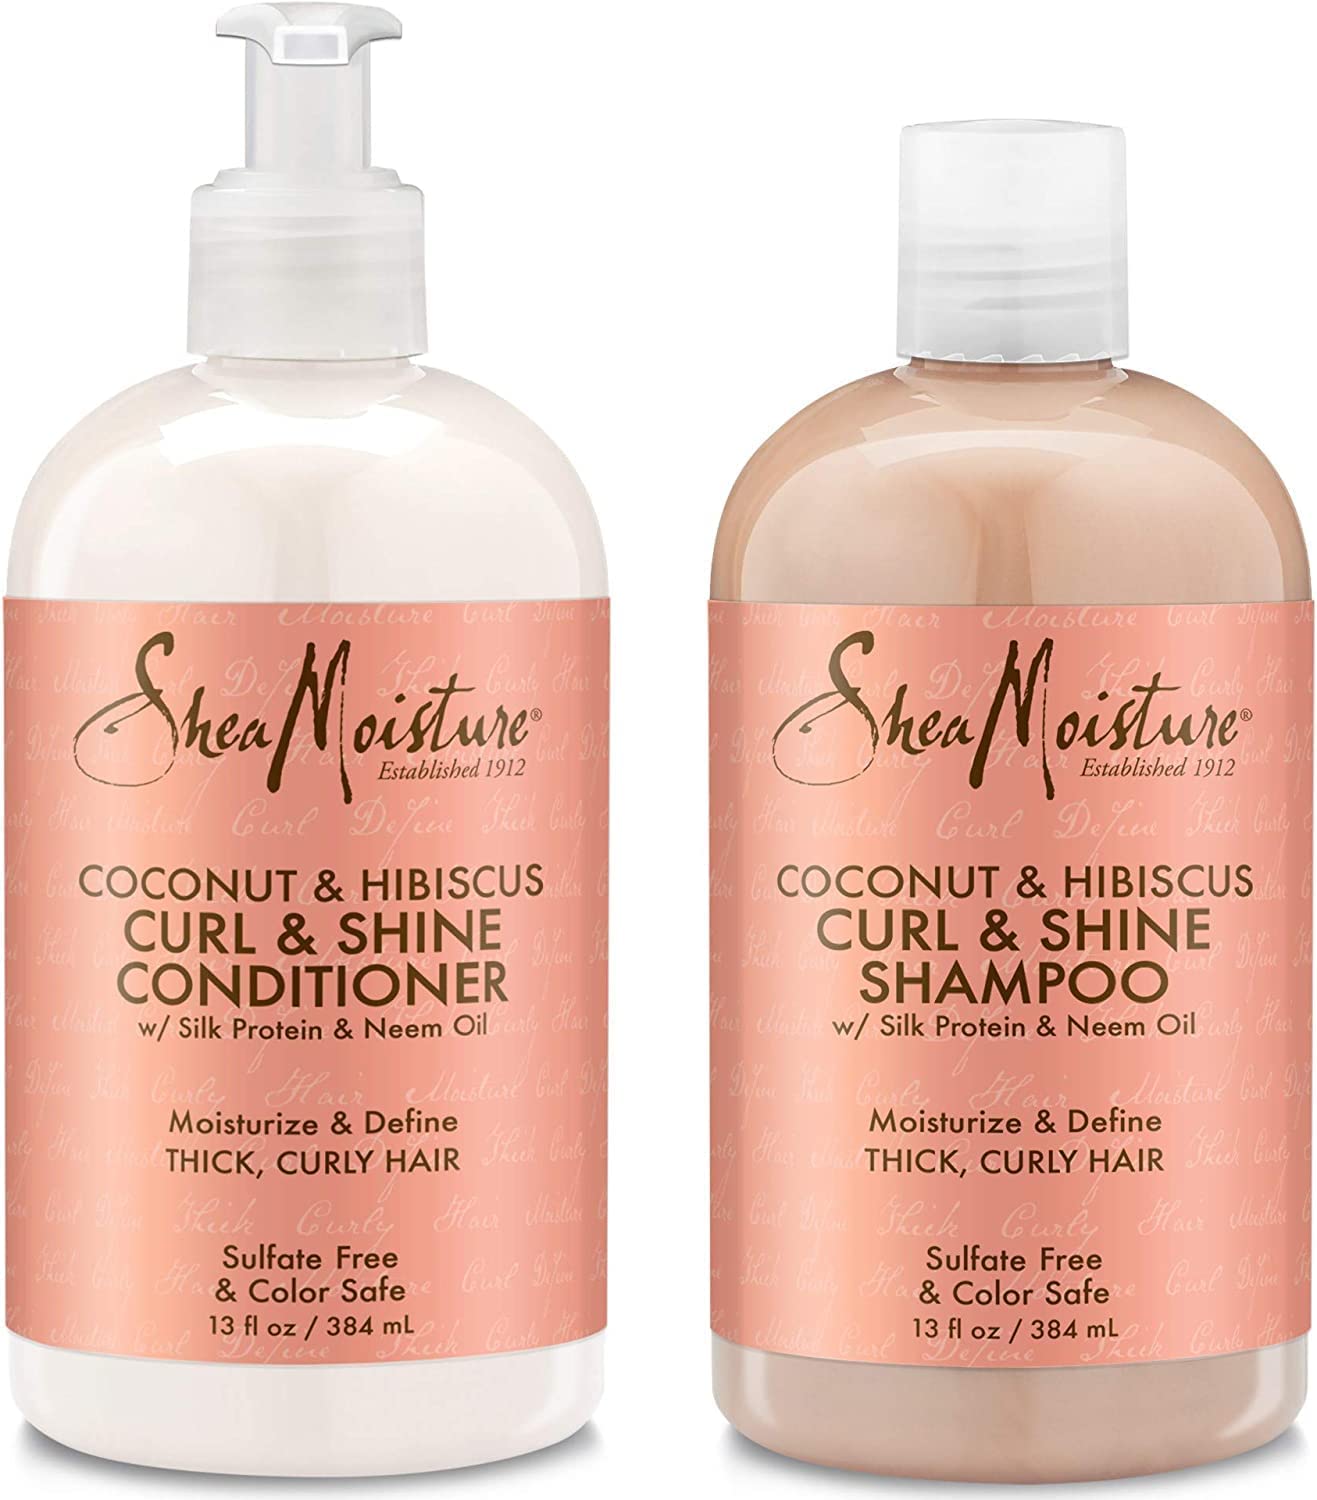 Shea Moisture Coconut & Hibiscus Curl & Shine Shampoo and Conditioner Set